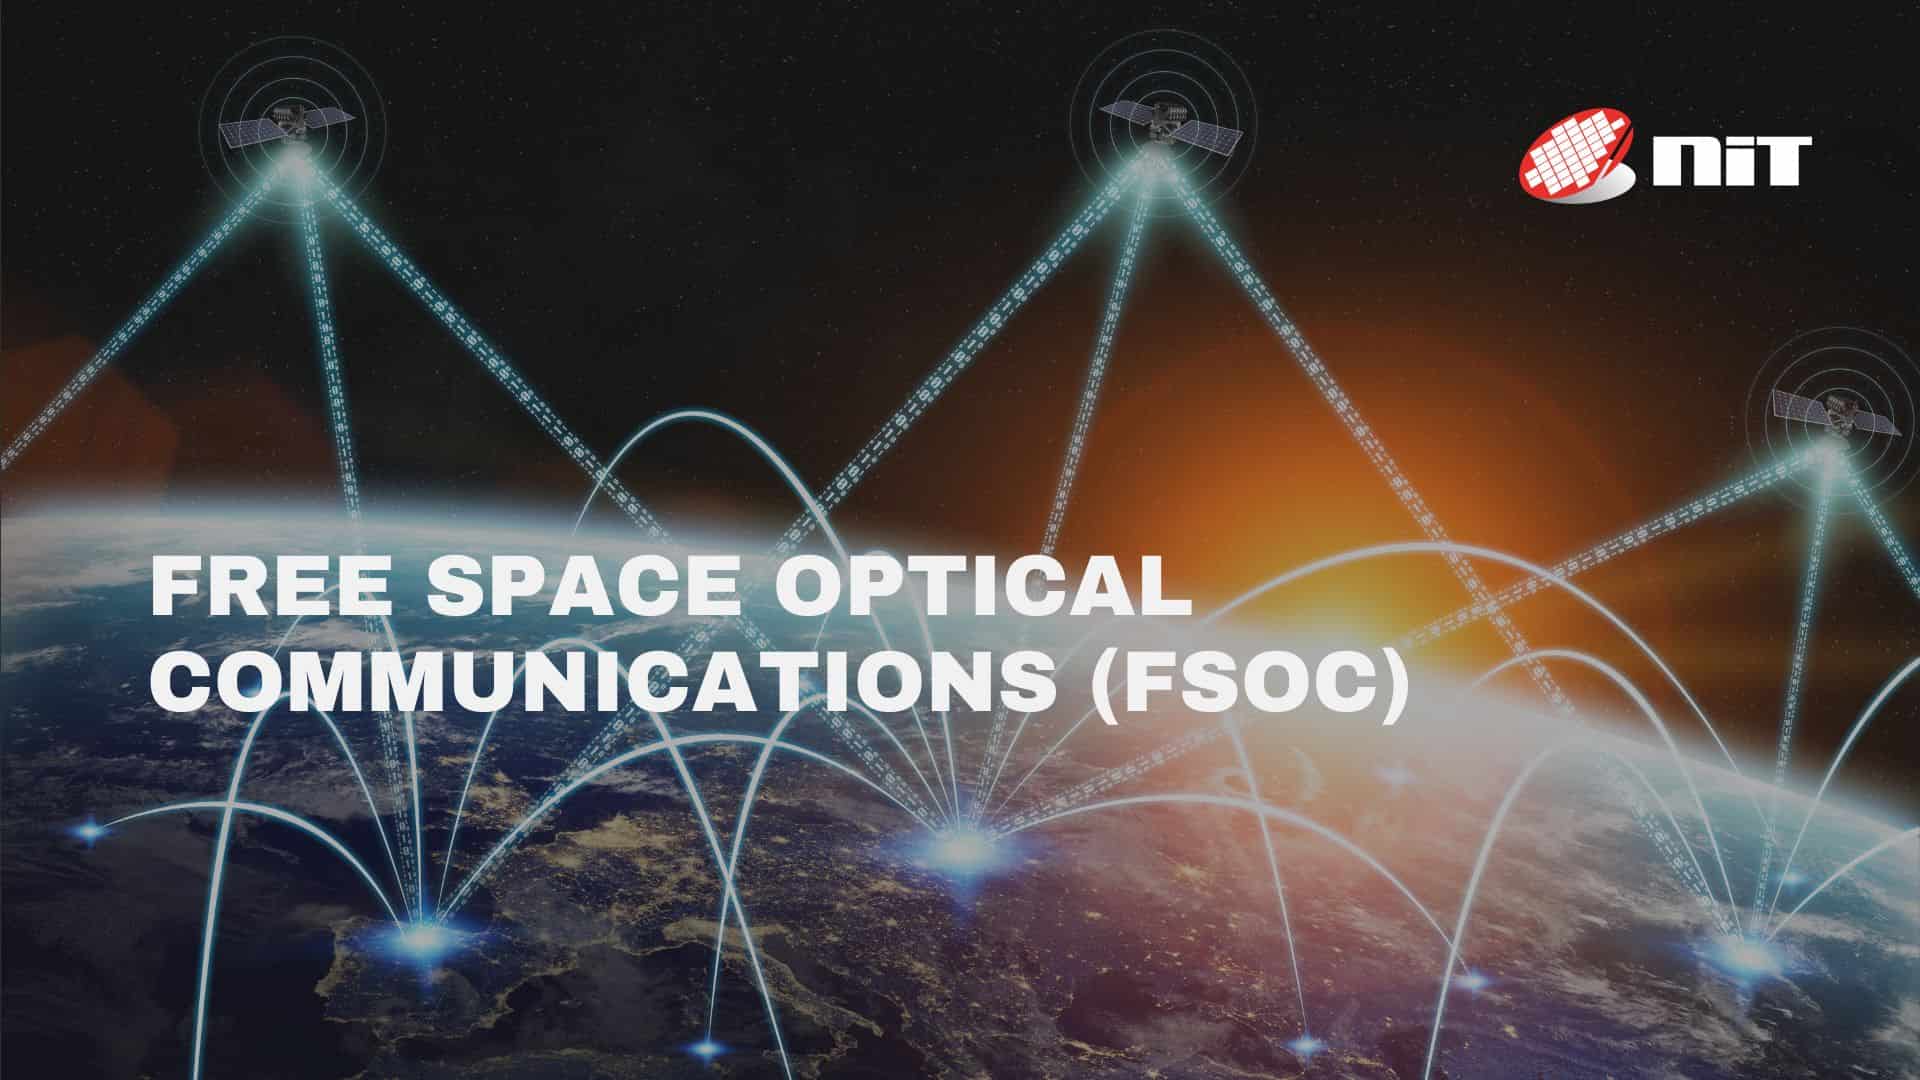 Free space optical communicaitons